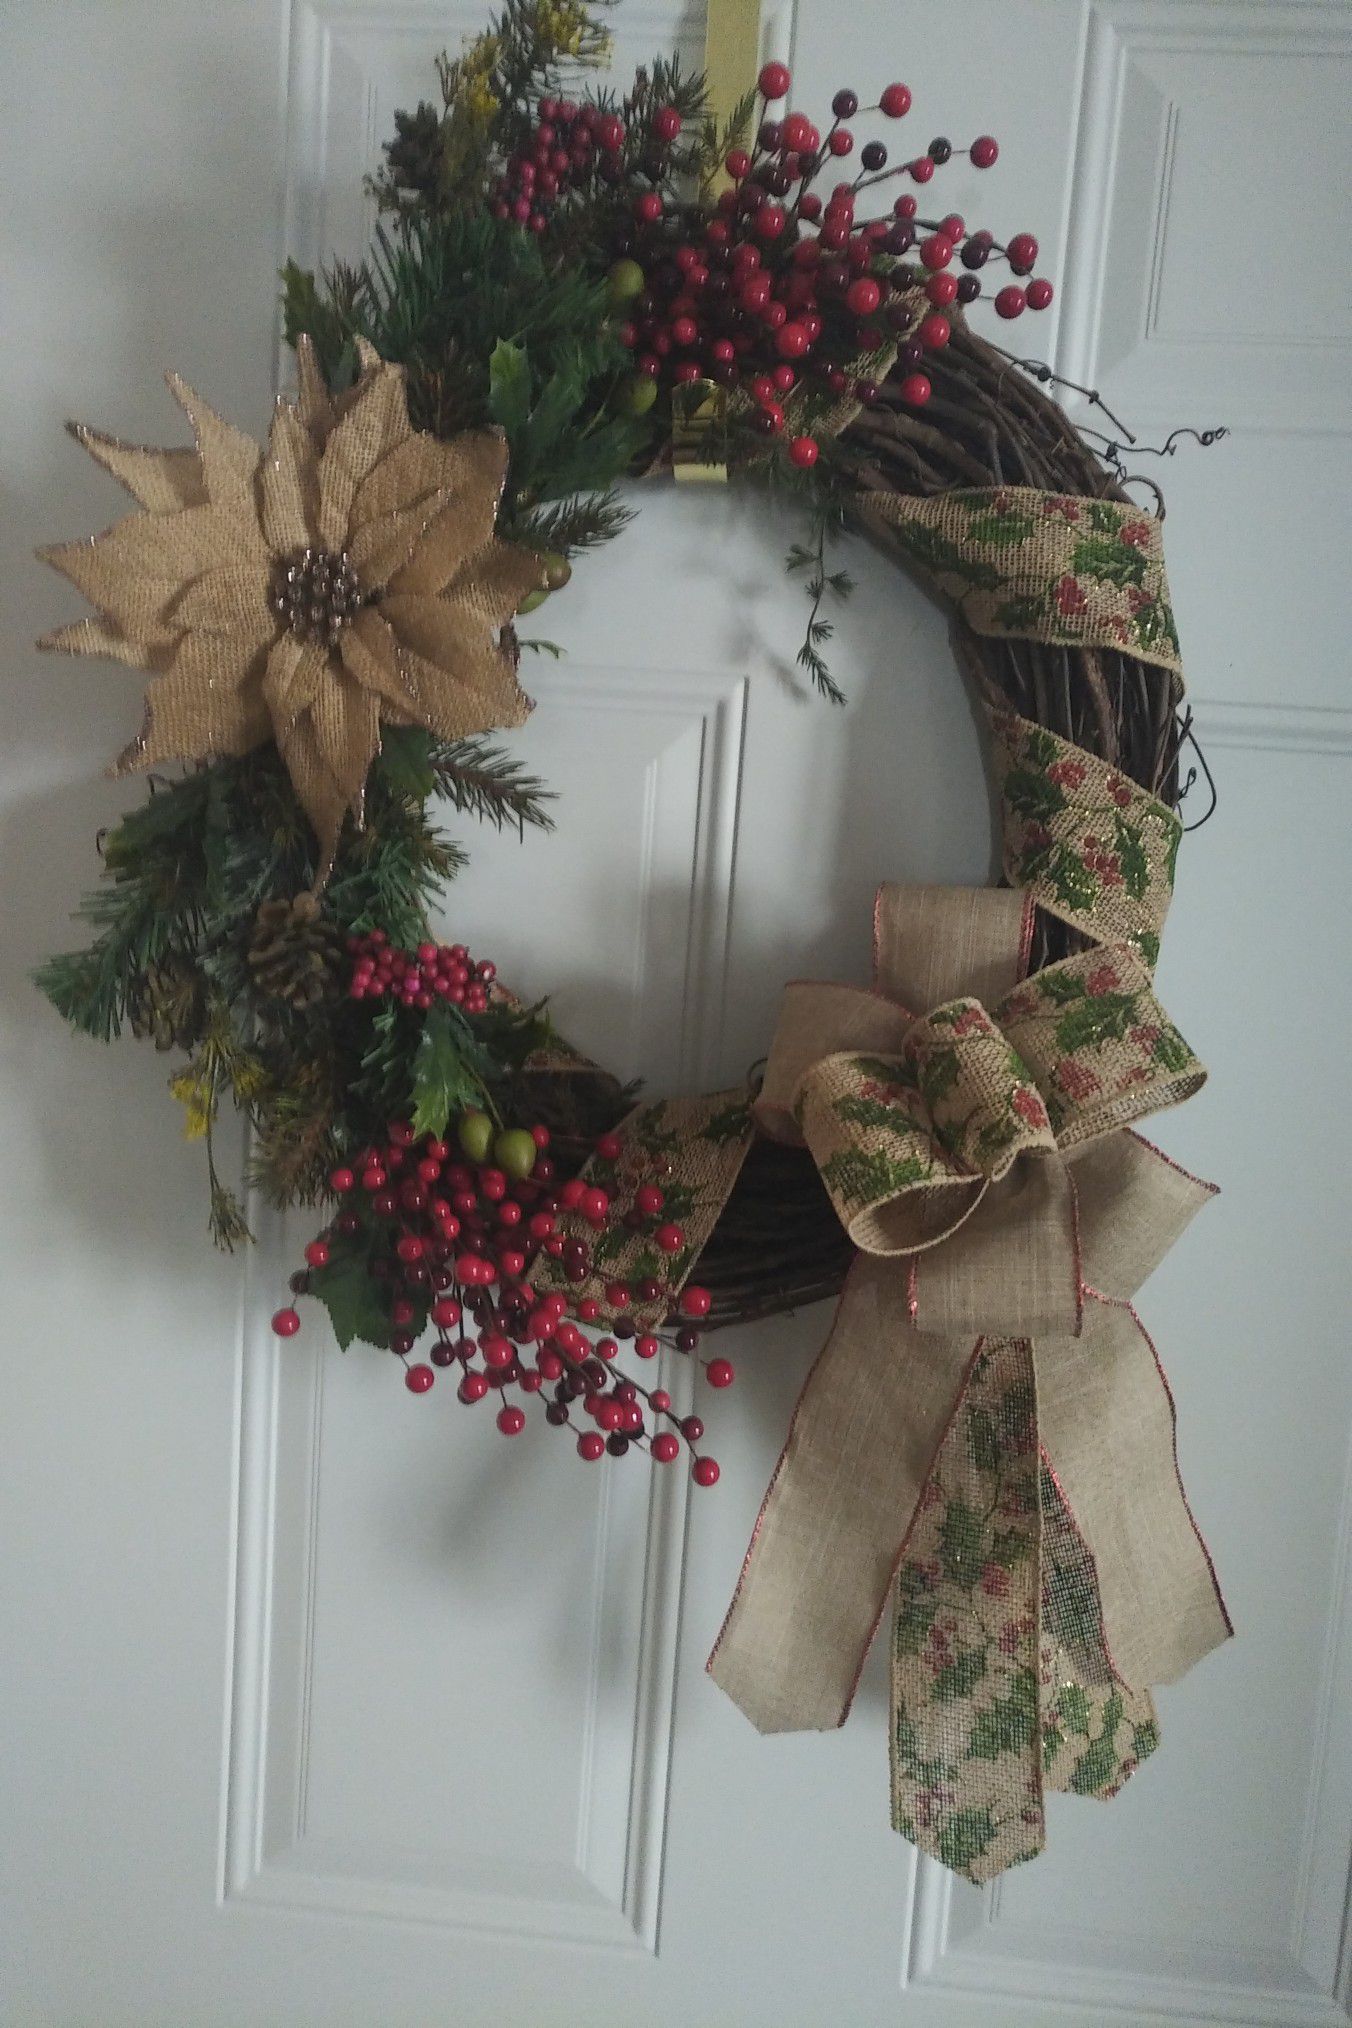 Rustic Christmas grapevine wreath